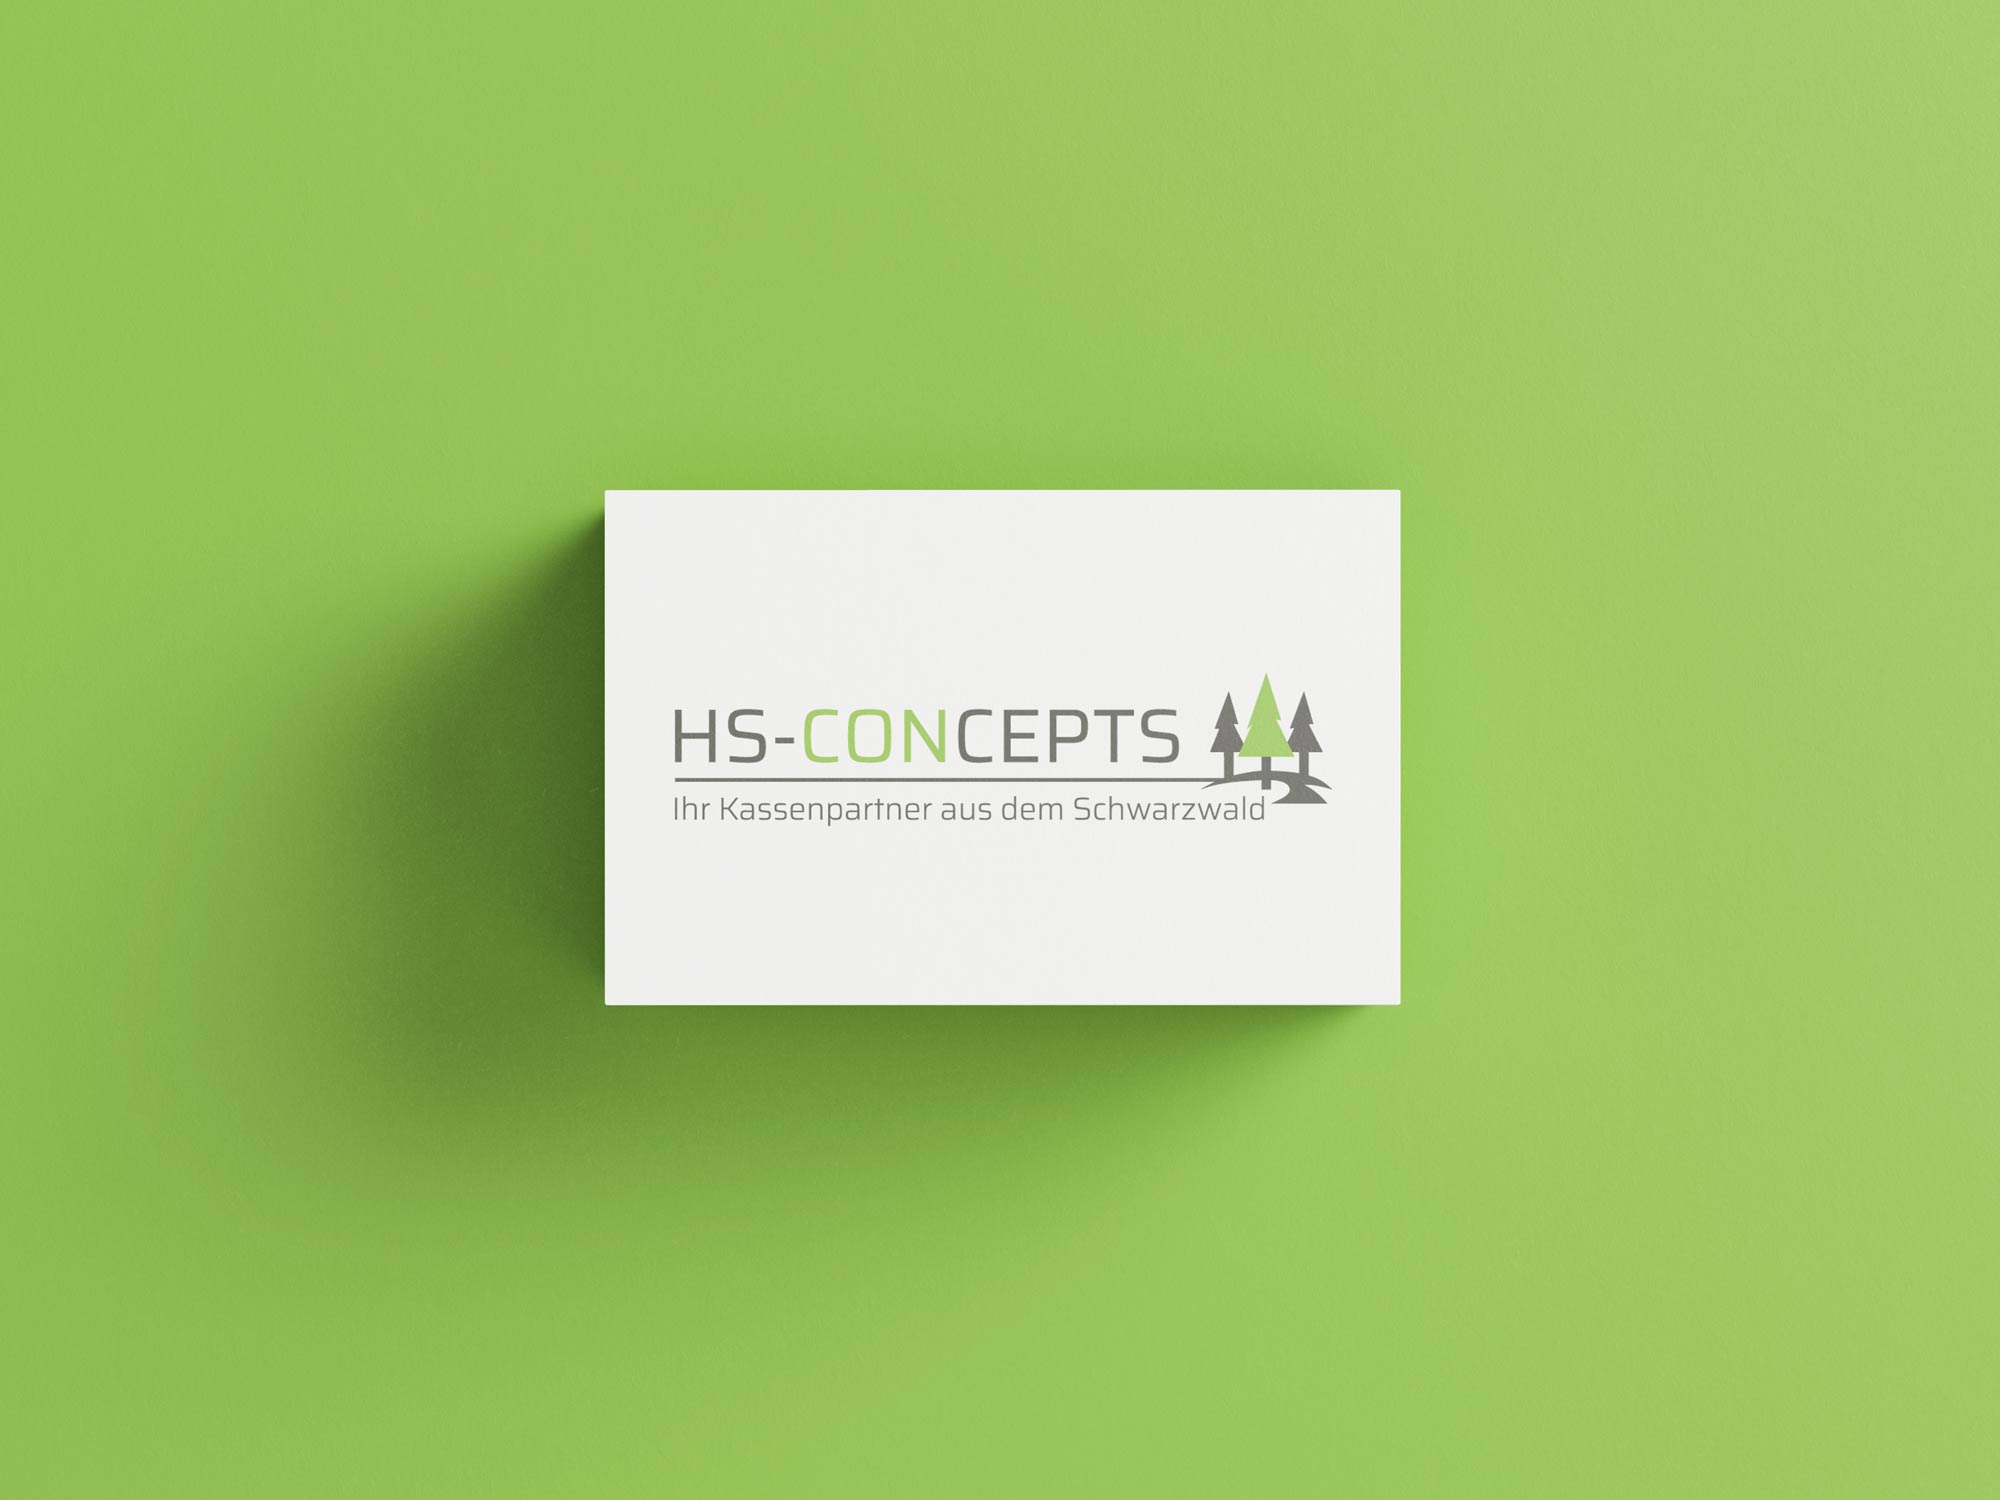 hs-concepts logo redesign